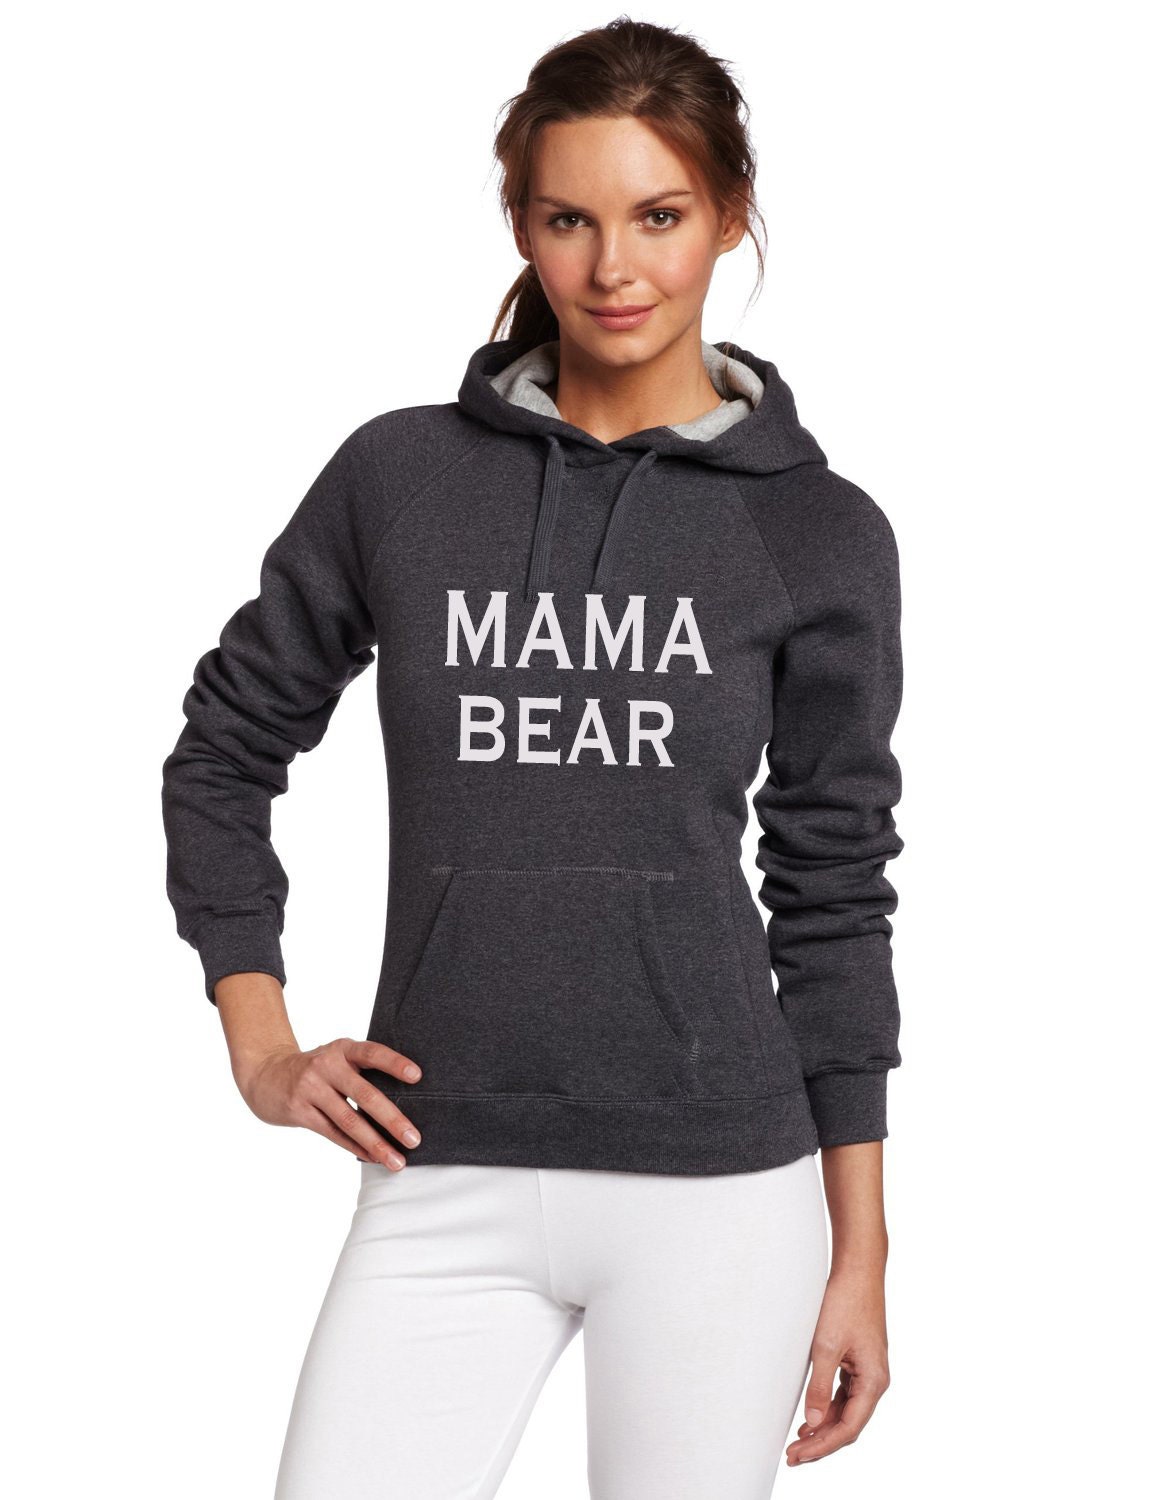 mama bear sweatshirt - simply southern mama bear sweatshirt